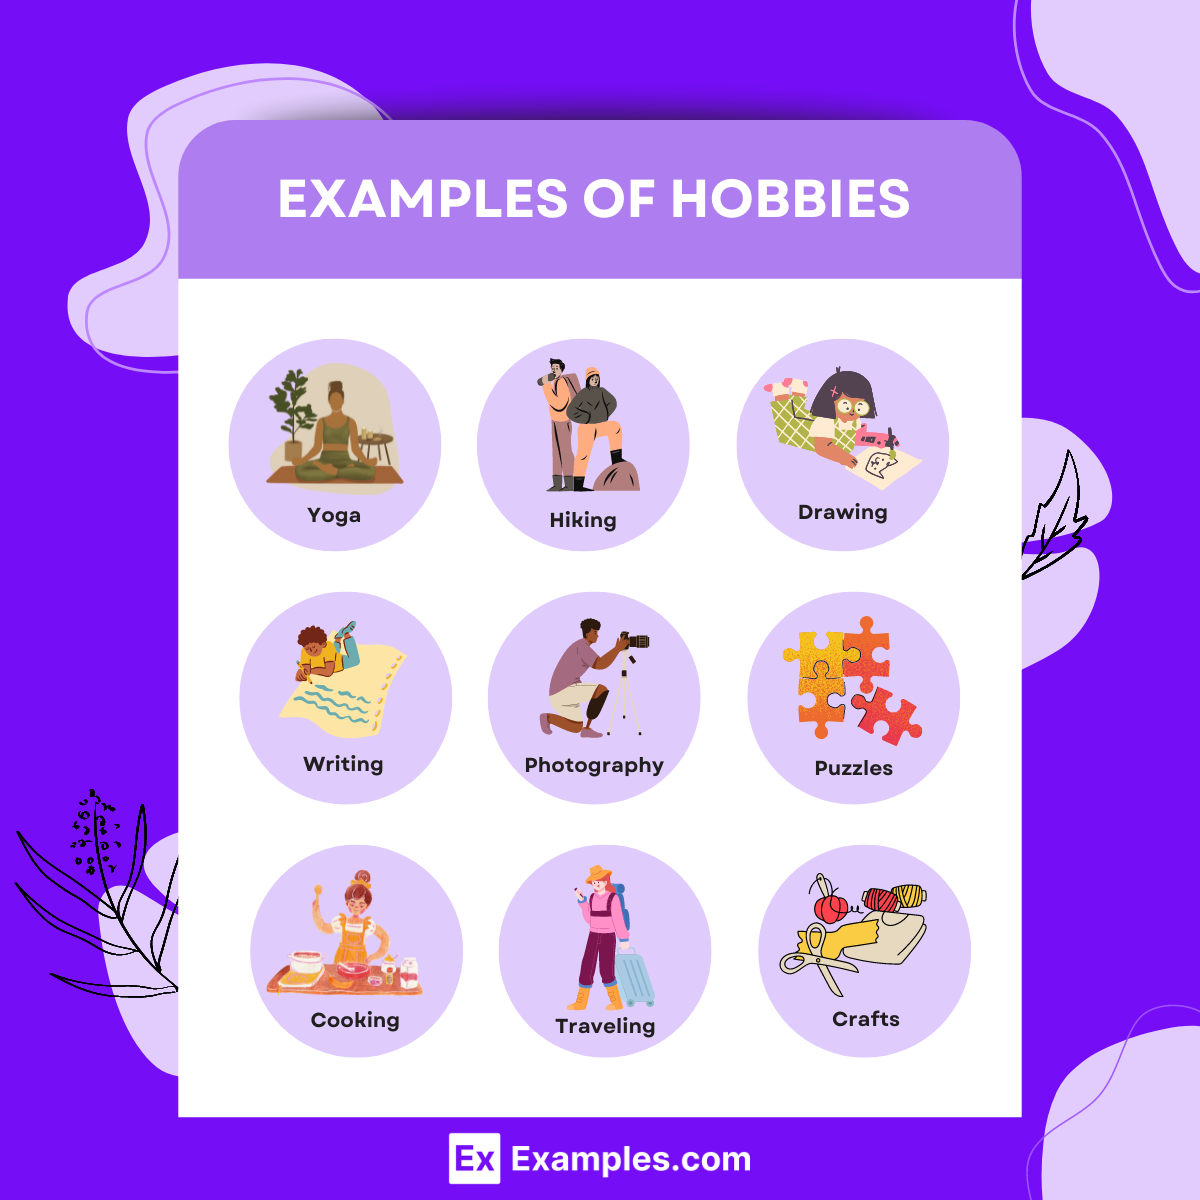 Examples of Hobbies